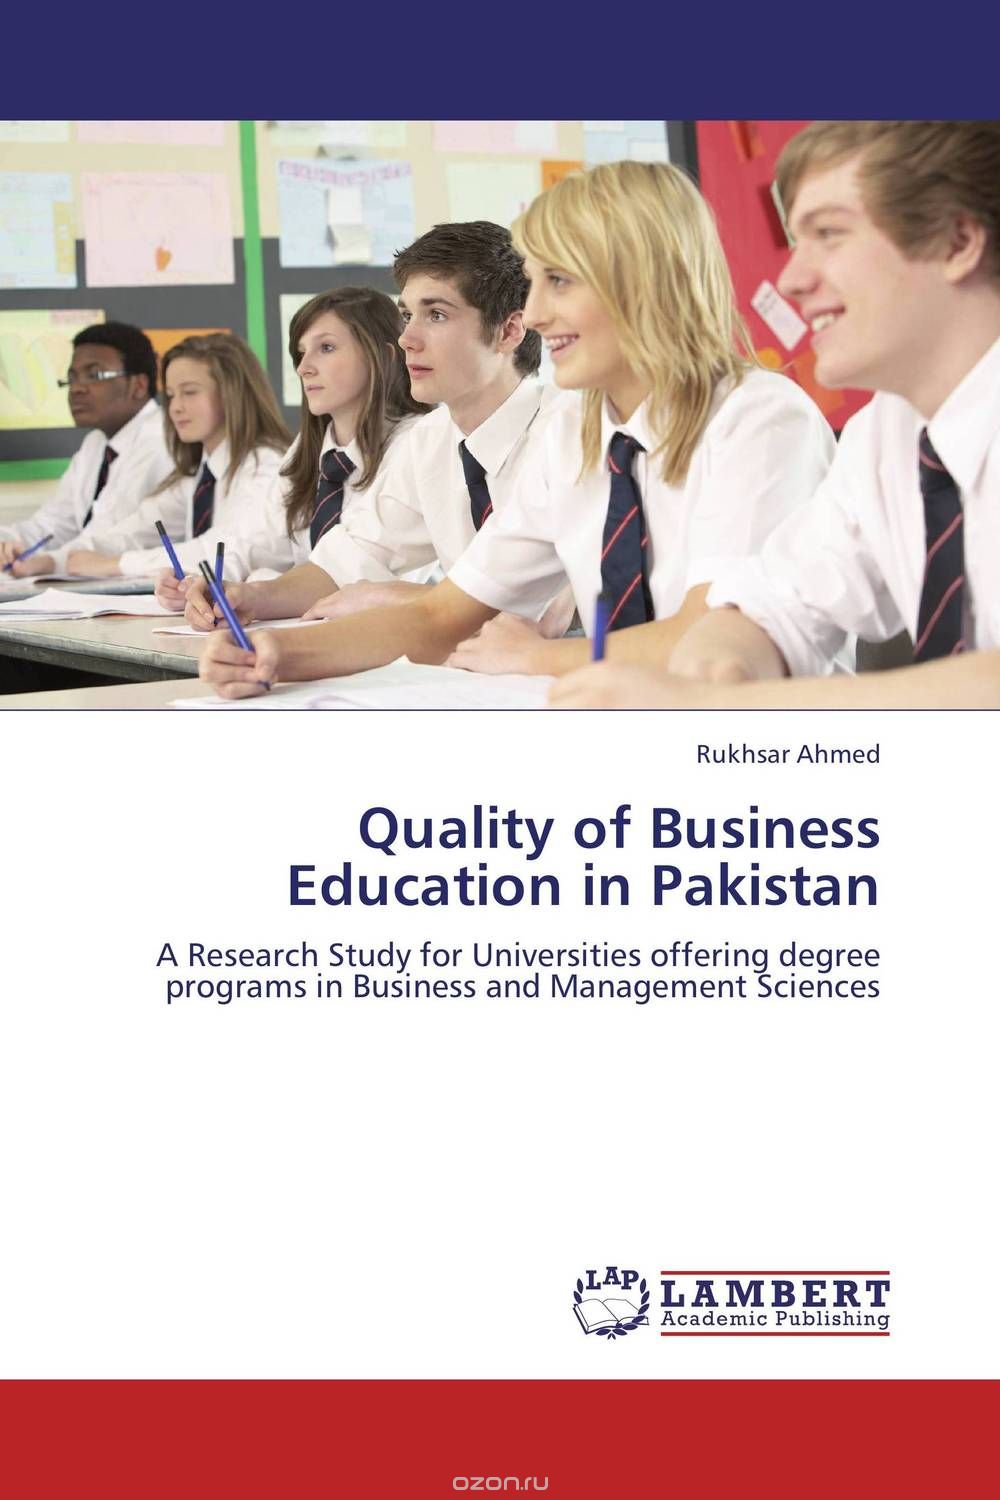 Скачать книгу "Quality of Business Education in Pakistan"